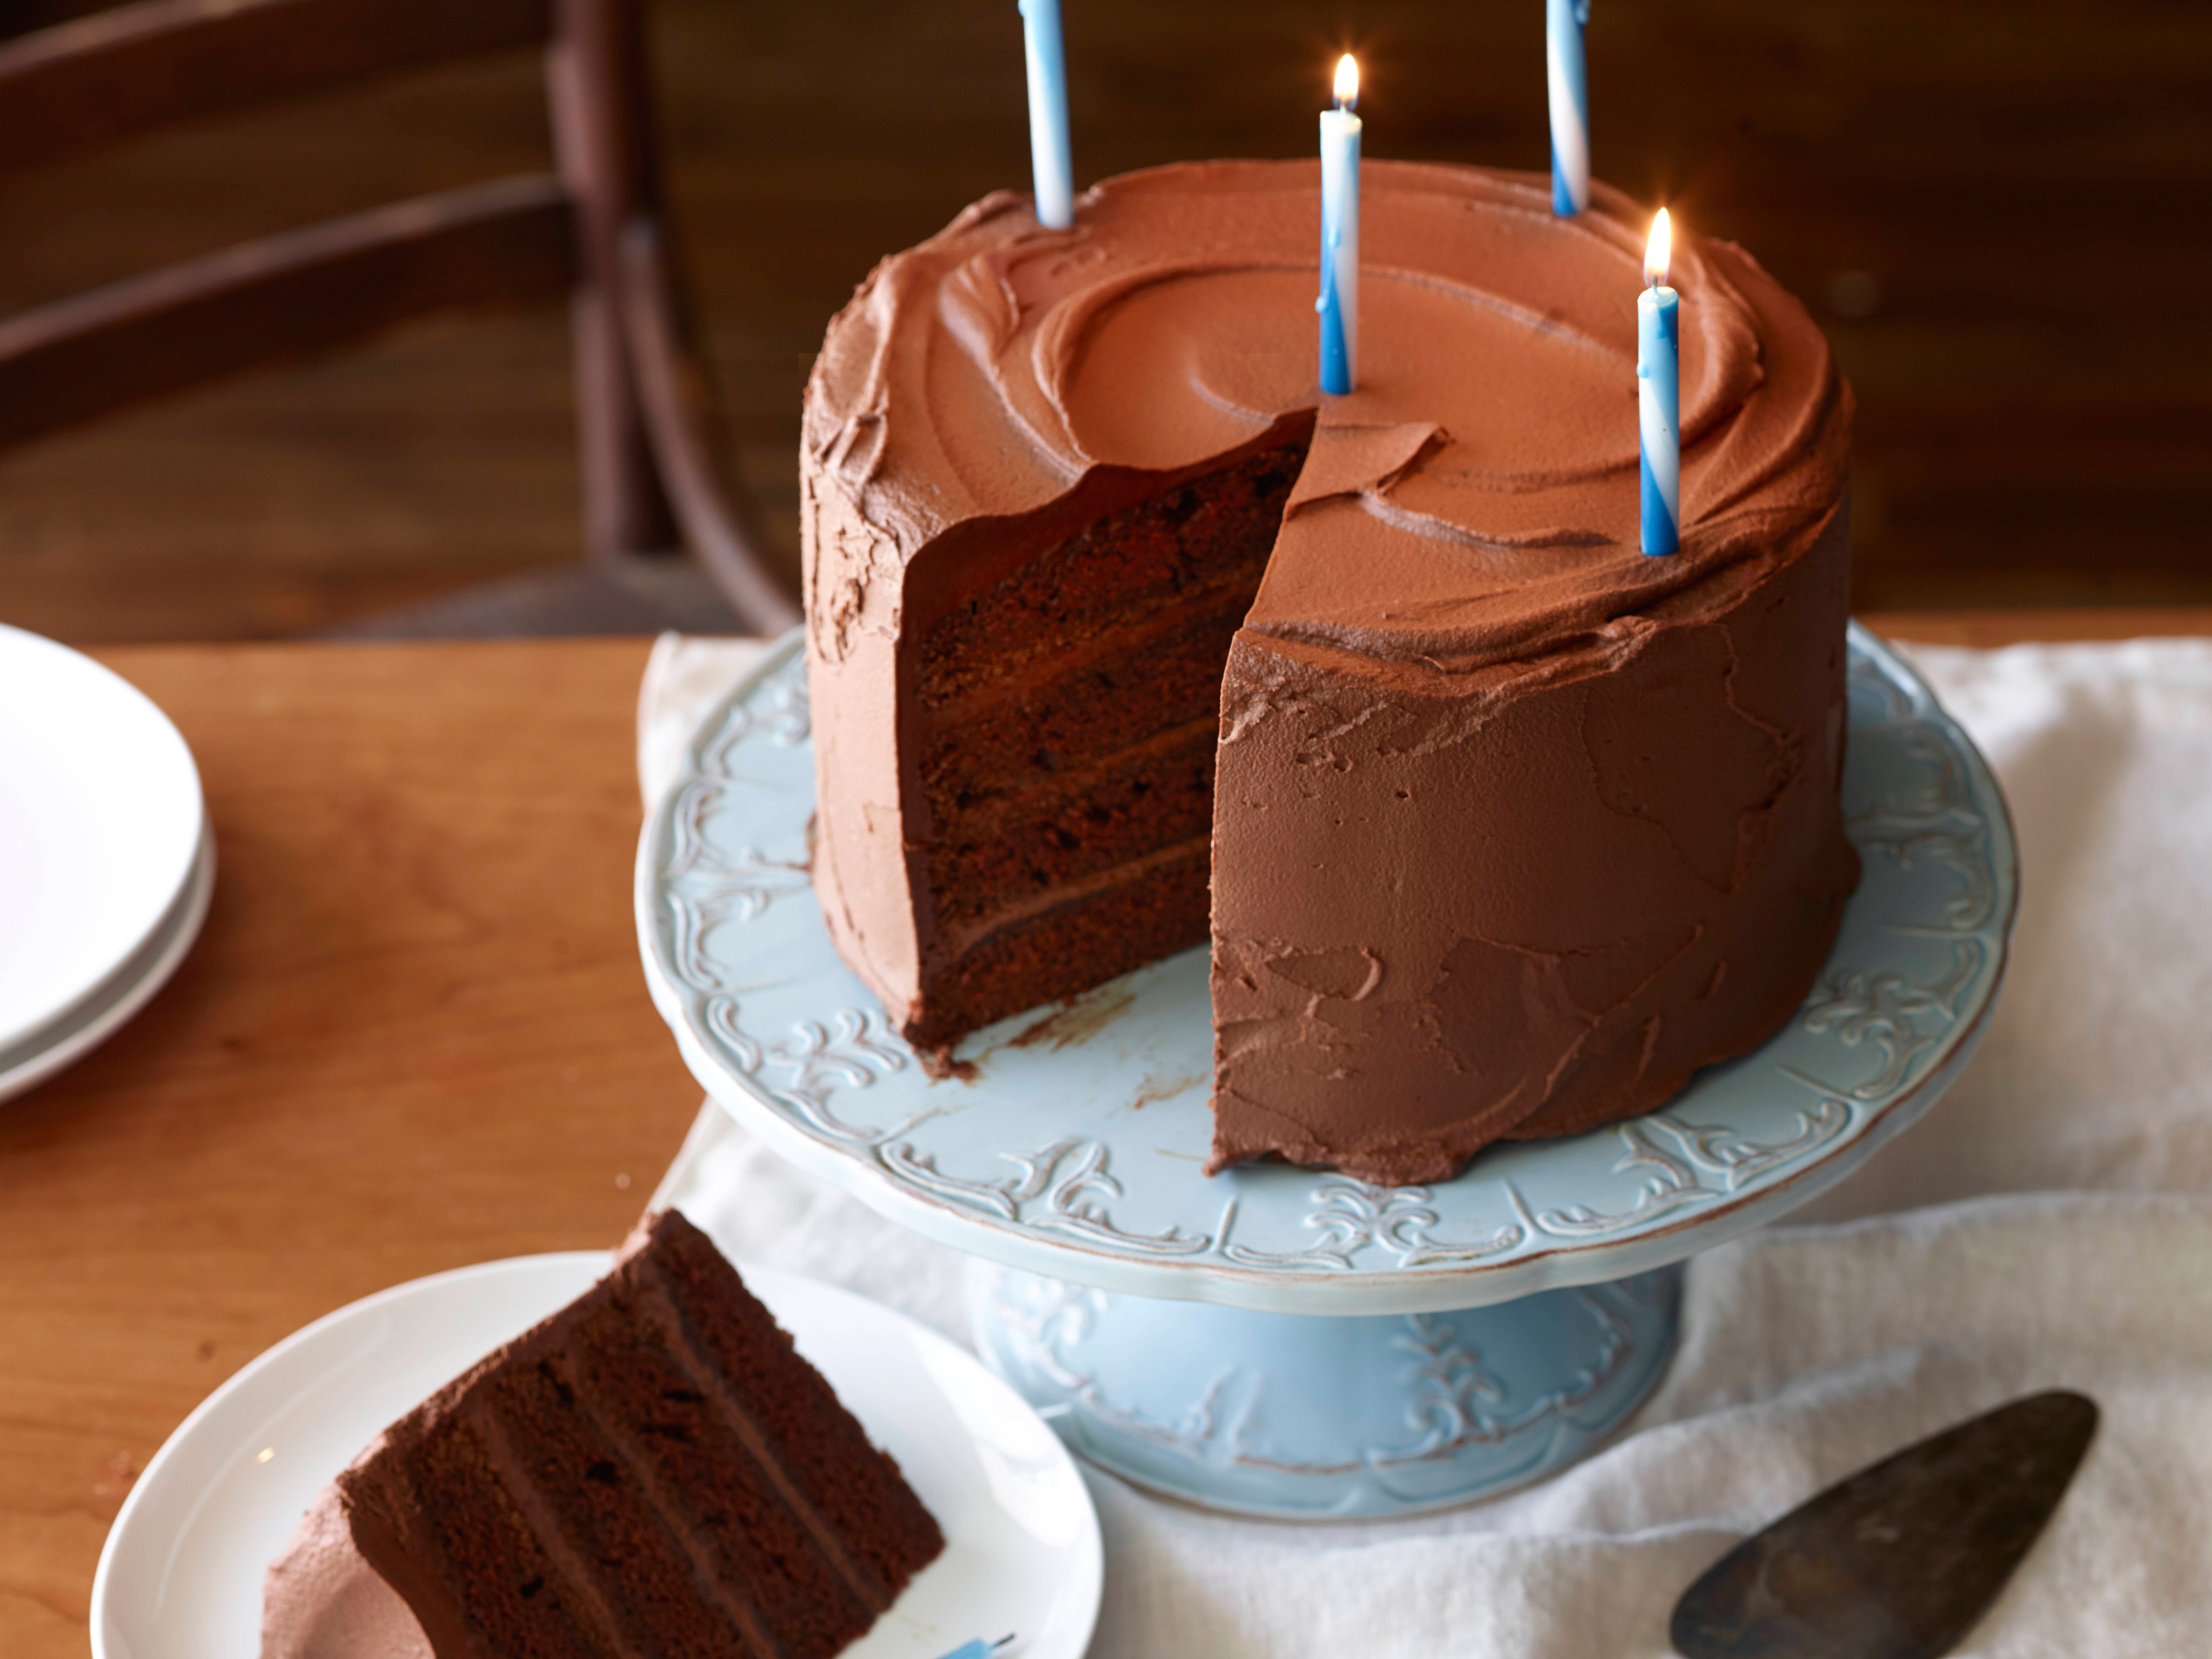 Big Chocolate Birthday Cake Recipe